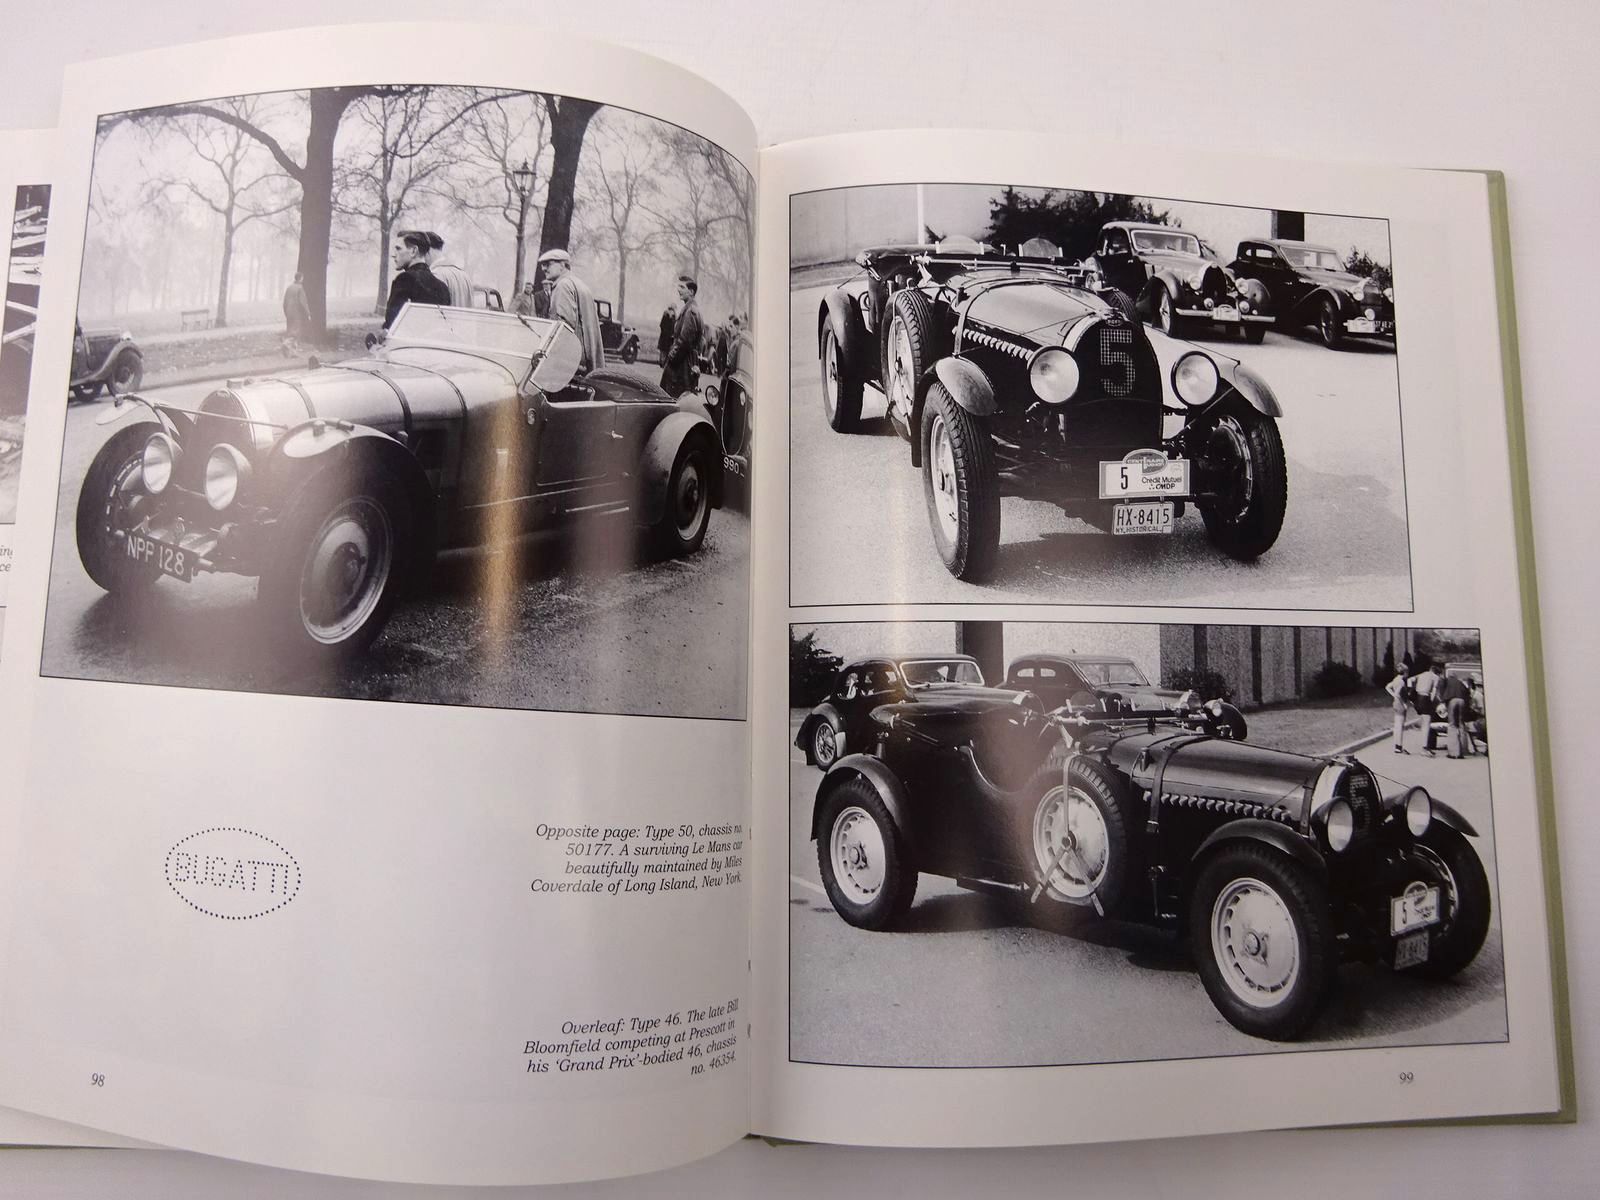 Bugatti Type 46 Wallpapers